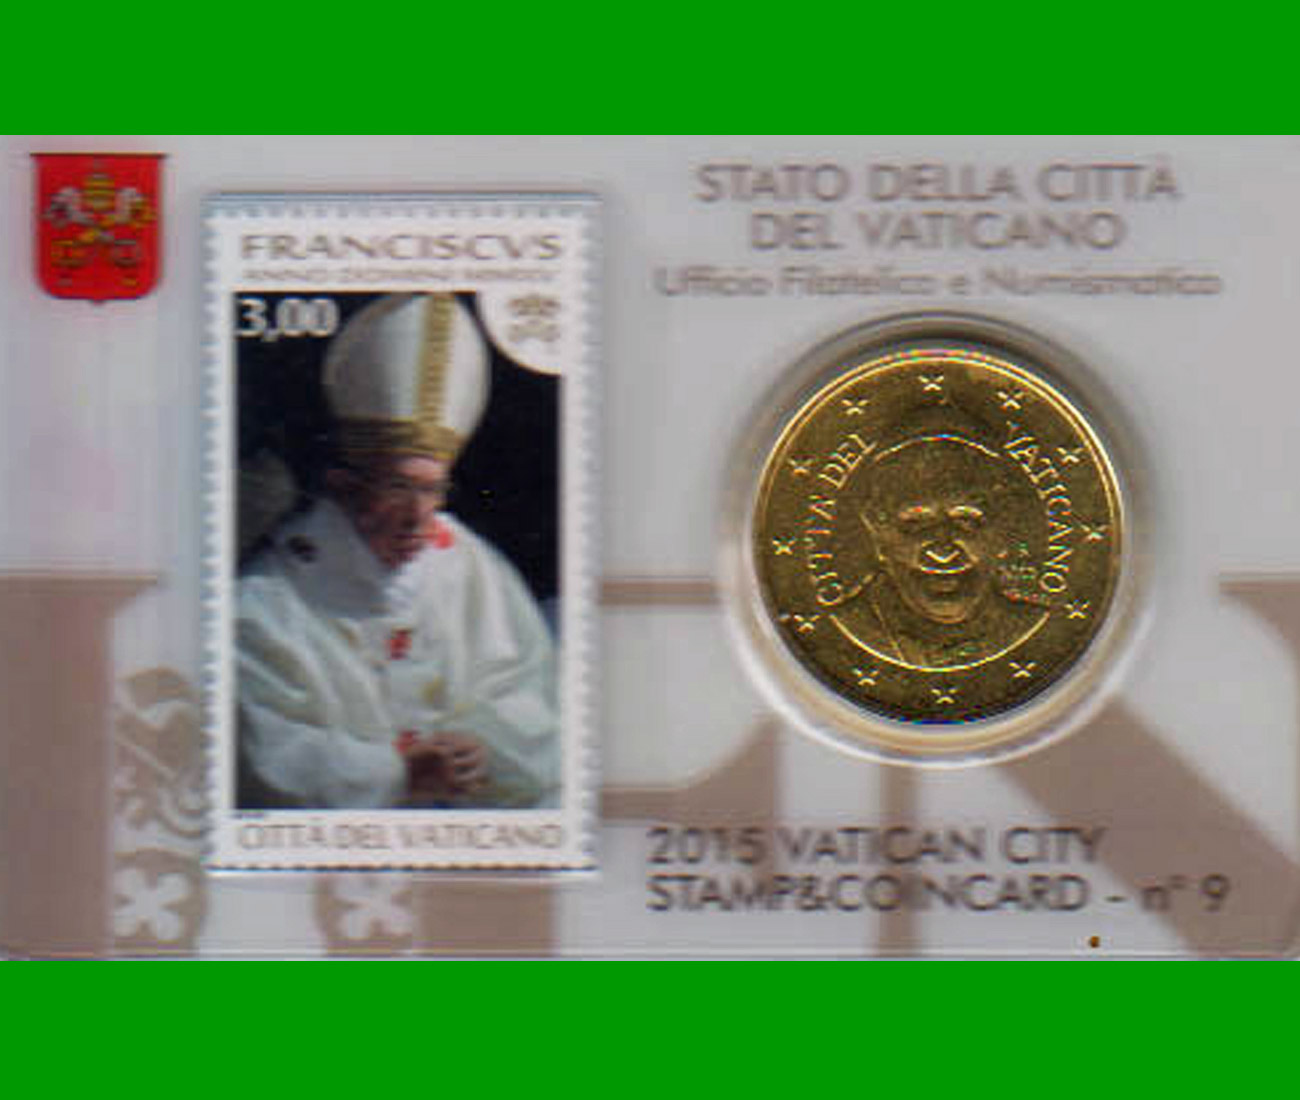  Offiz. 50 Cent Coincard mit Briefmarke 3,00€ Vatikan 2015 nur 17.500 Stück!   